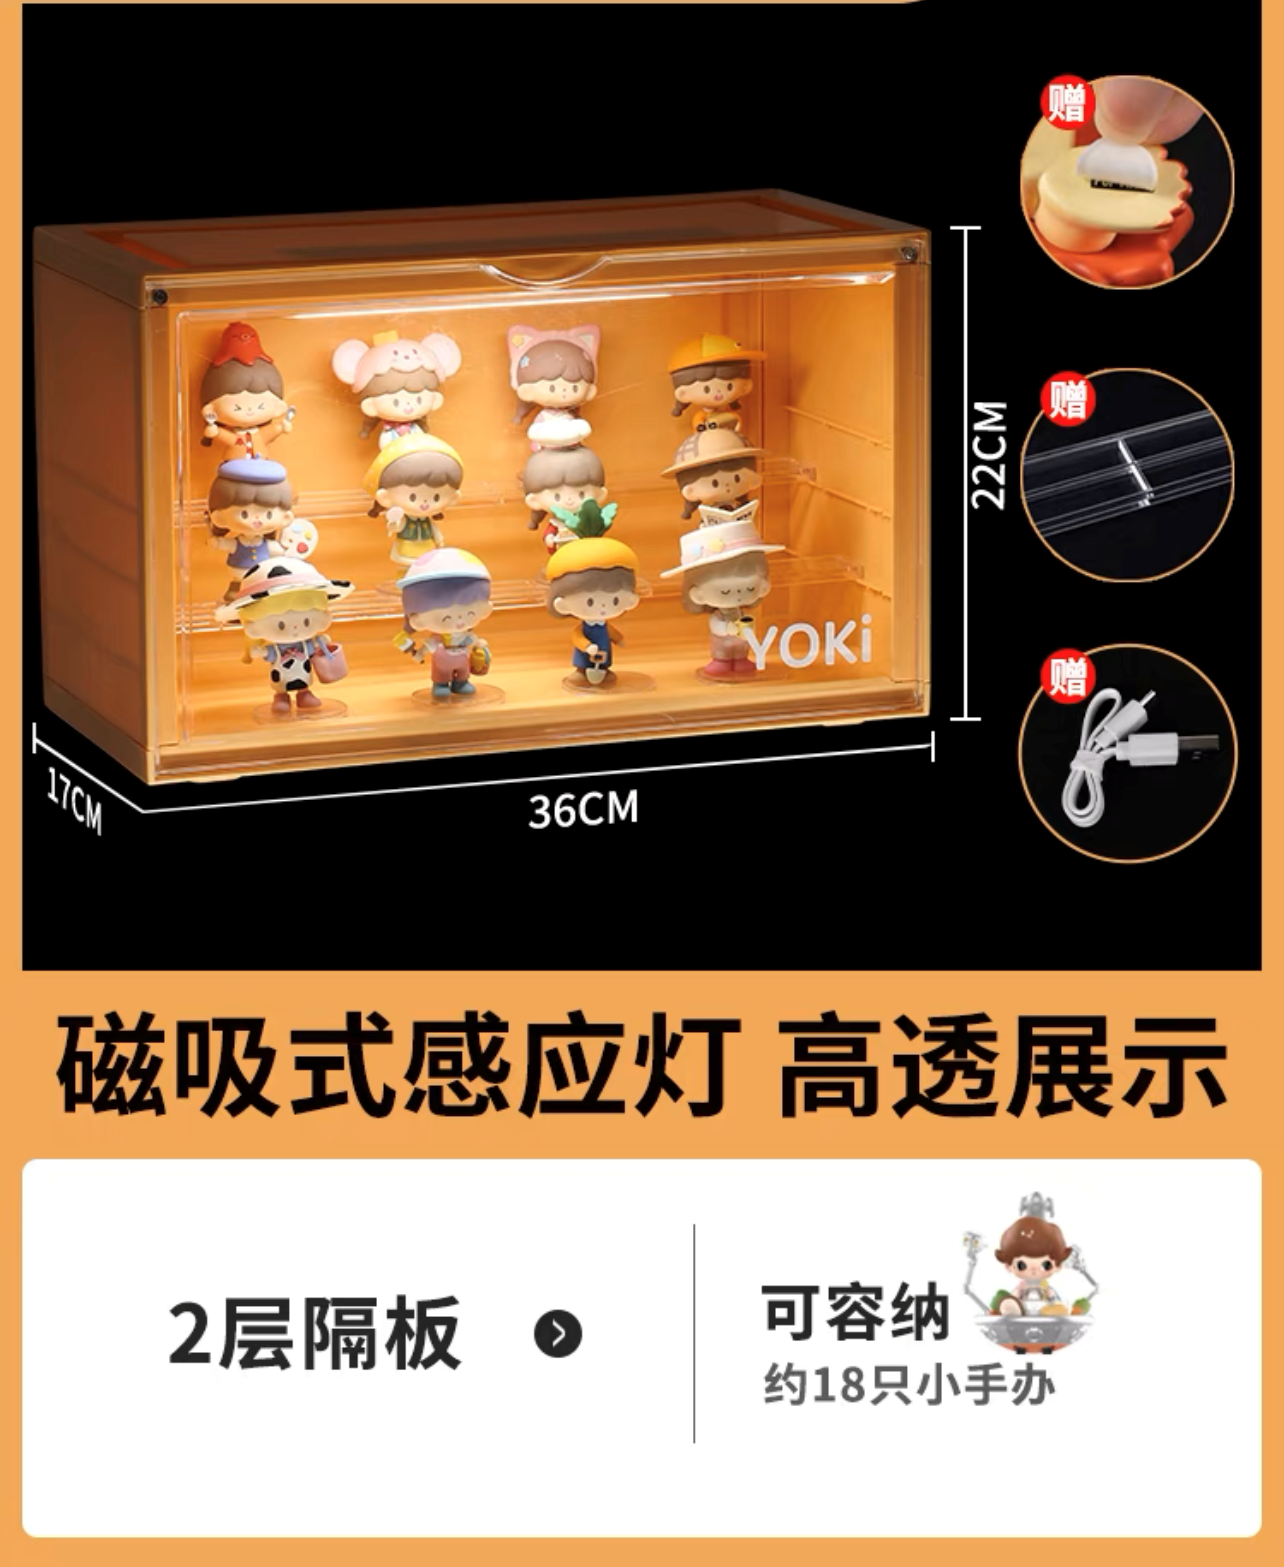 YOKI Display Case with LED Light